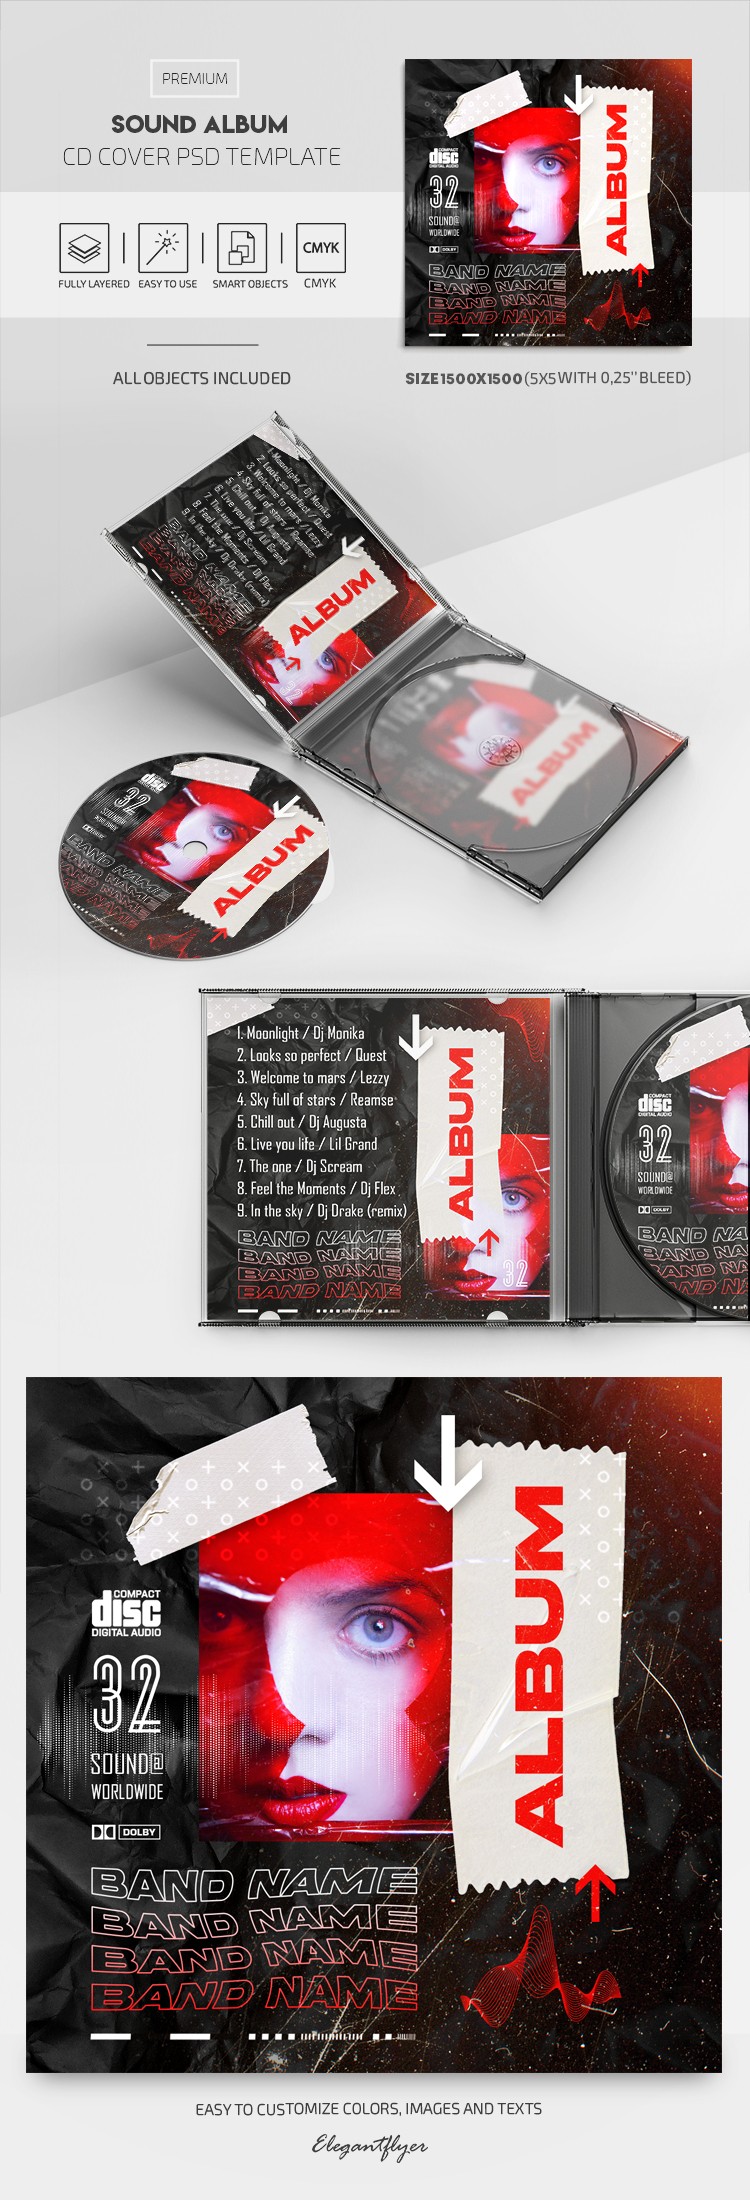 Copertina del CD dell'album audio by ElegantFlyer